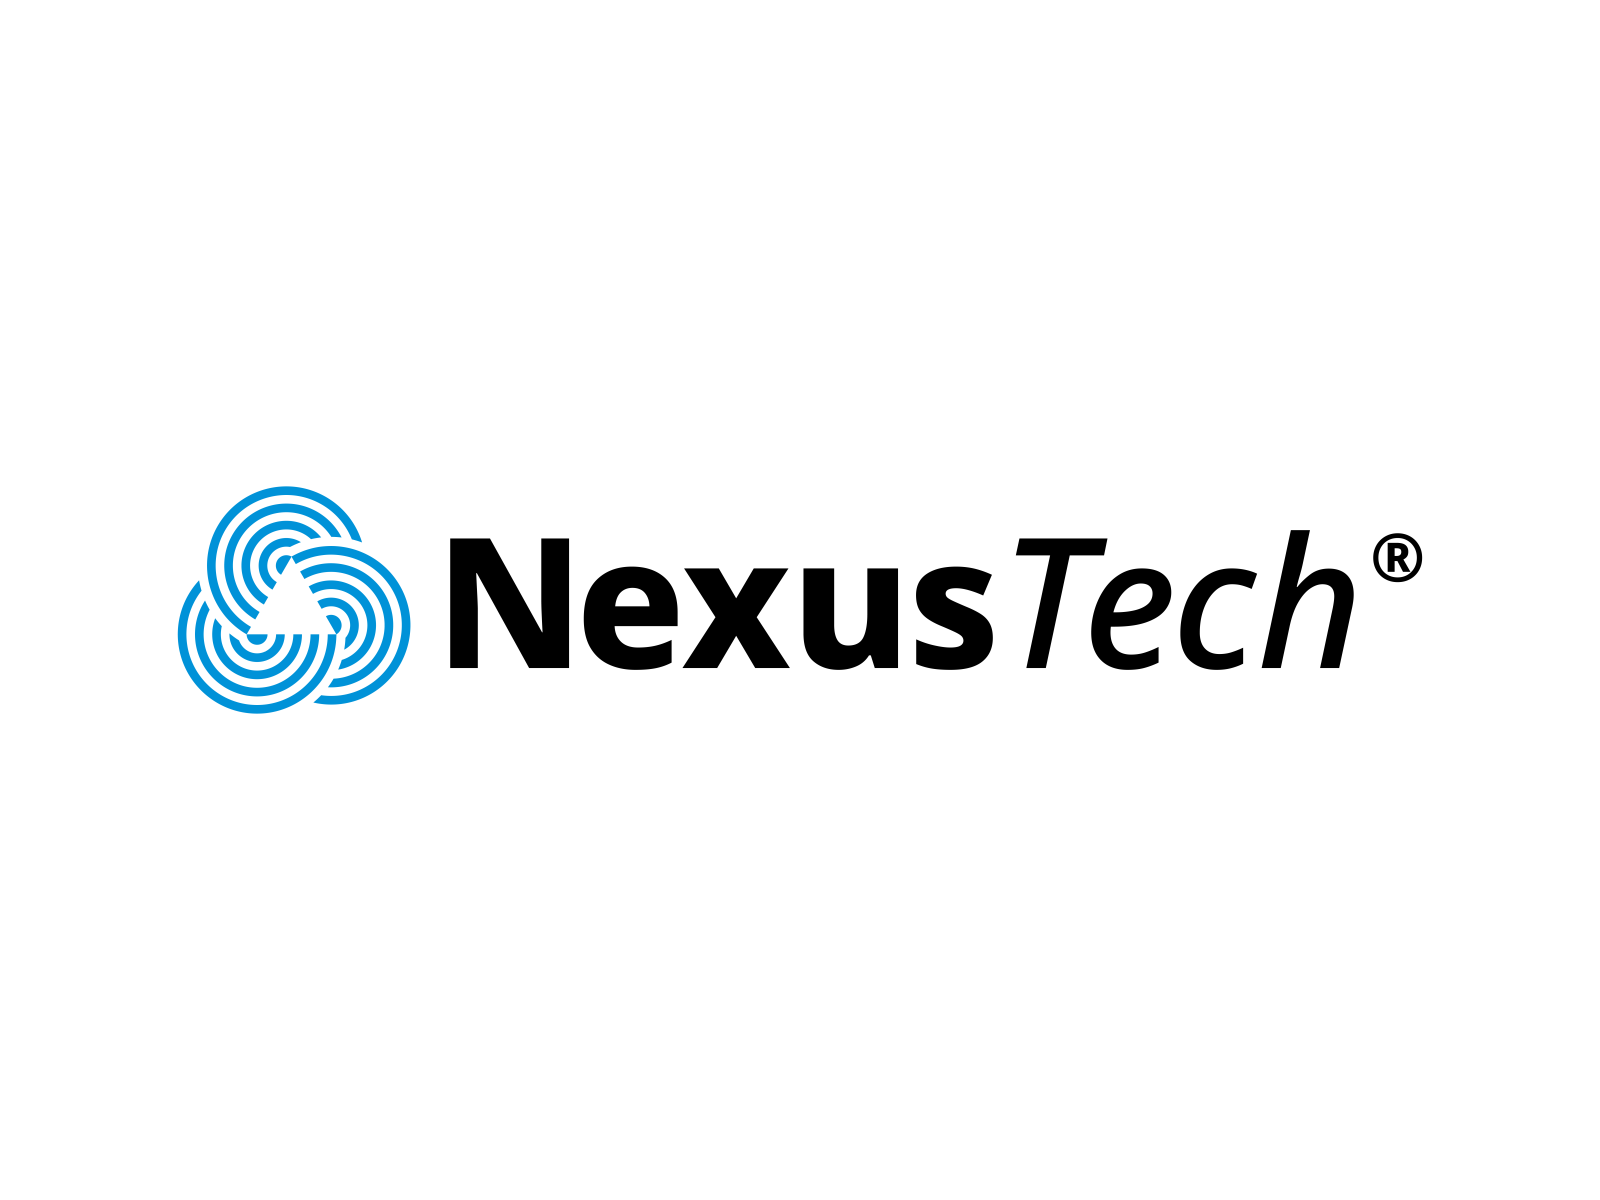 NexusTech by Dylan Thompson on Dribbble